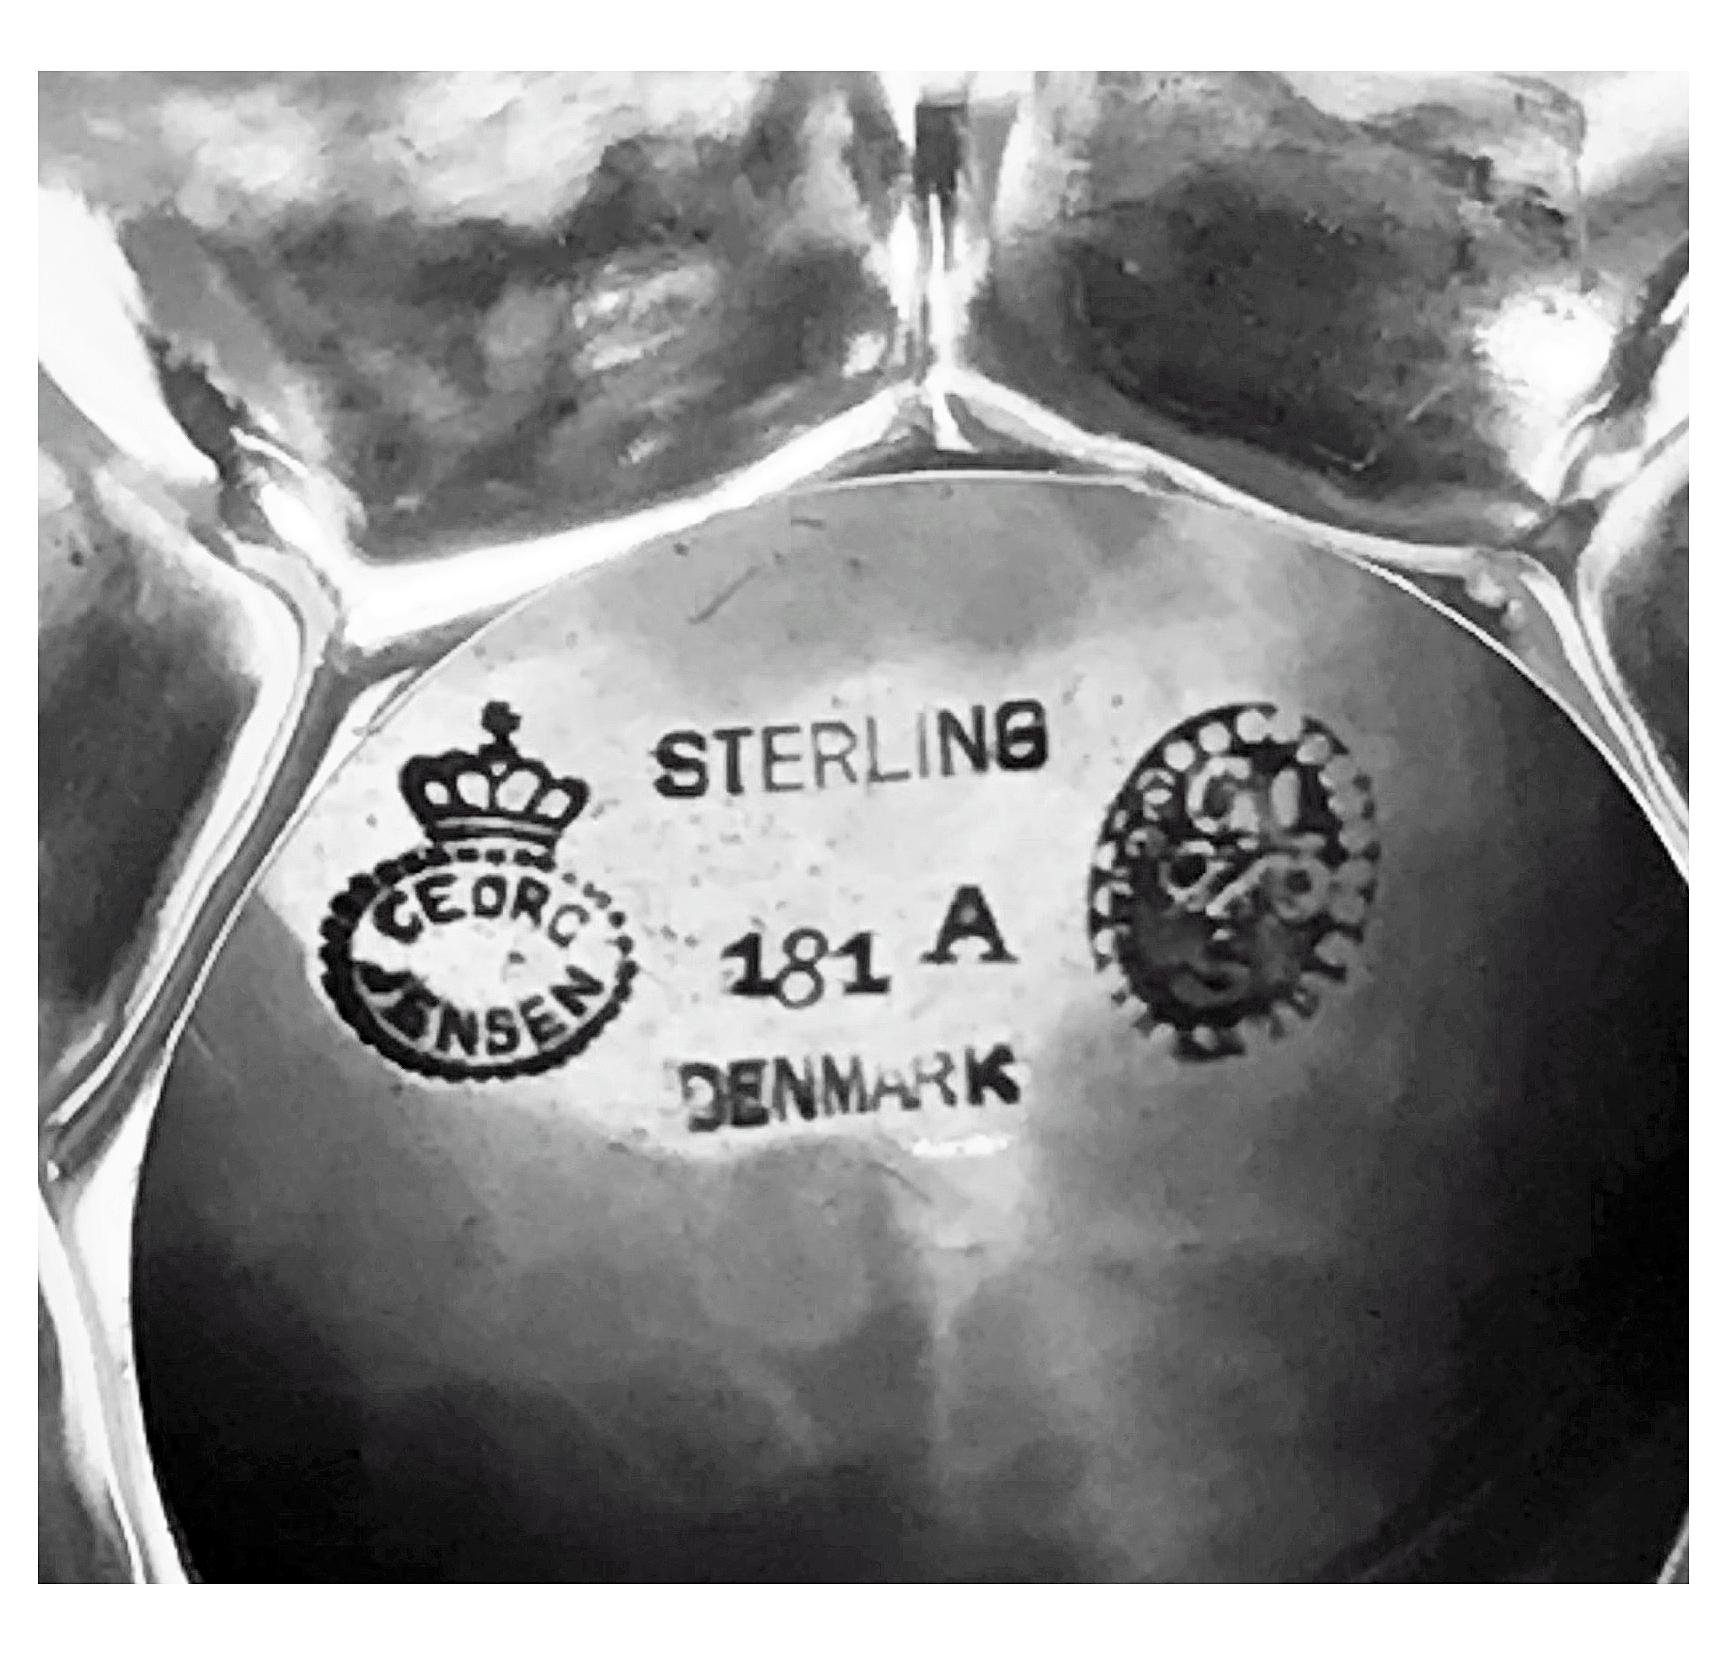 Danish Georg Jensen Sterling Silver Dish 1926-1932, Design No 181A